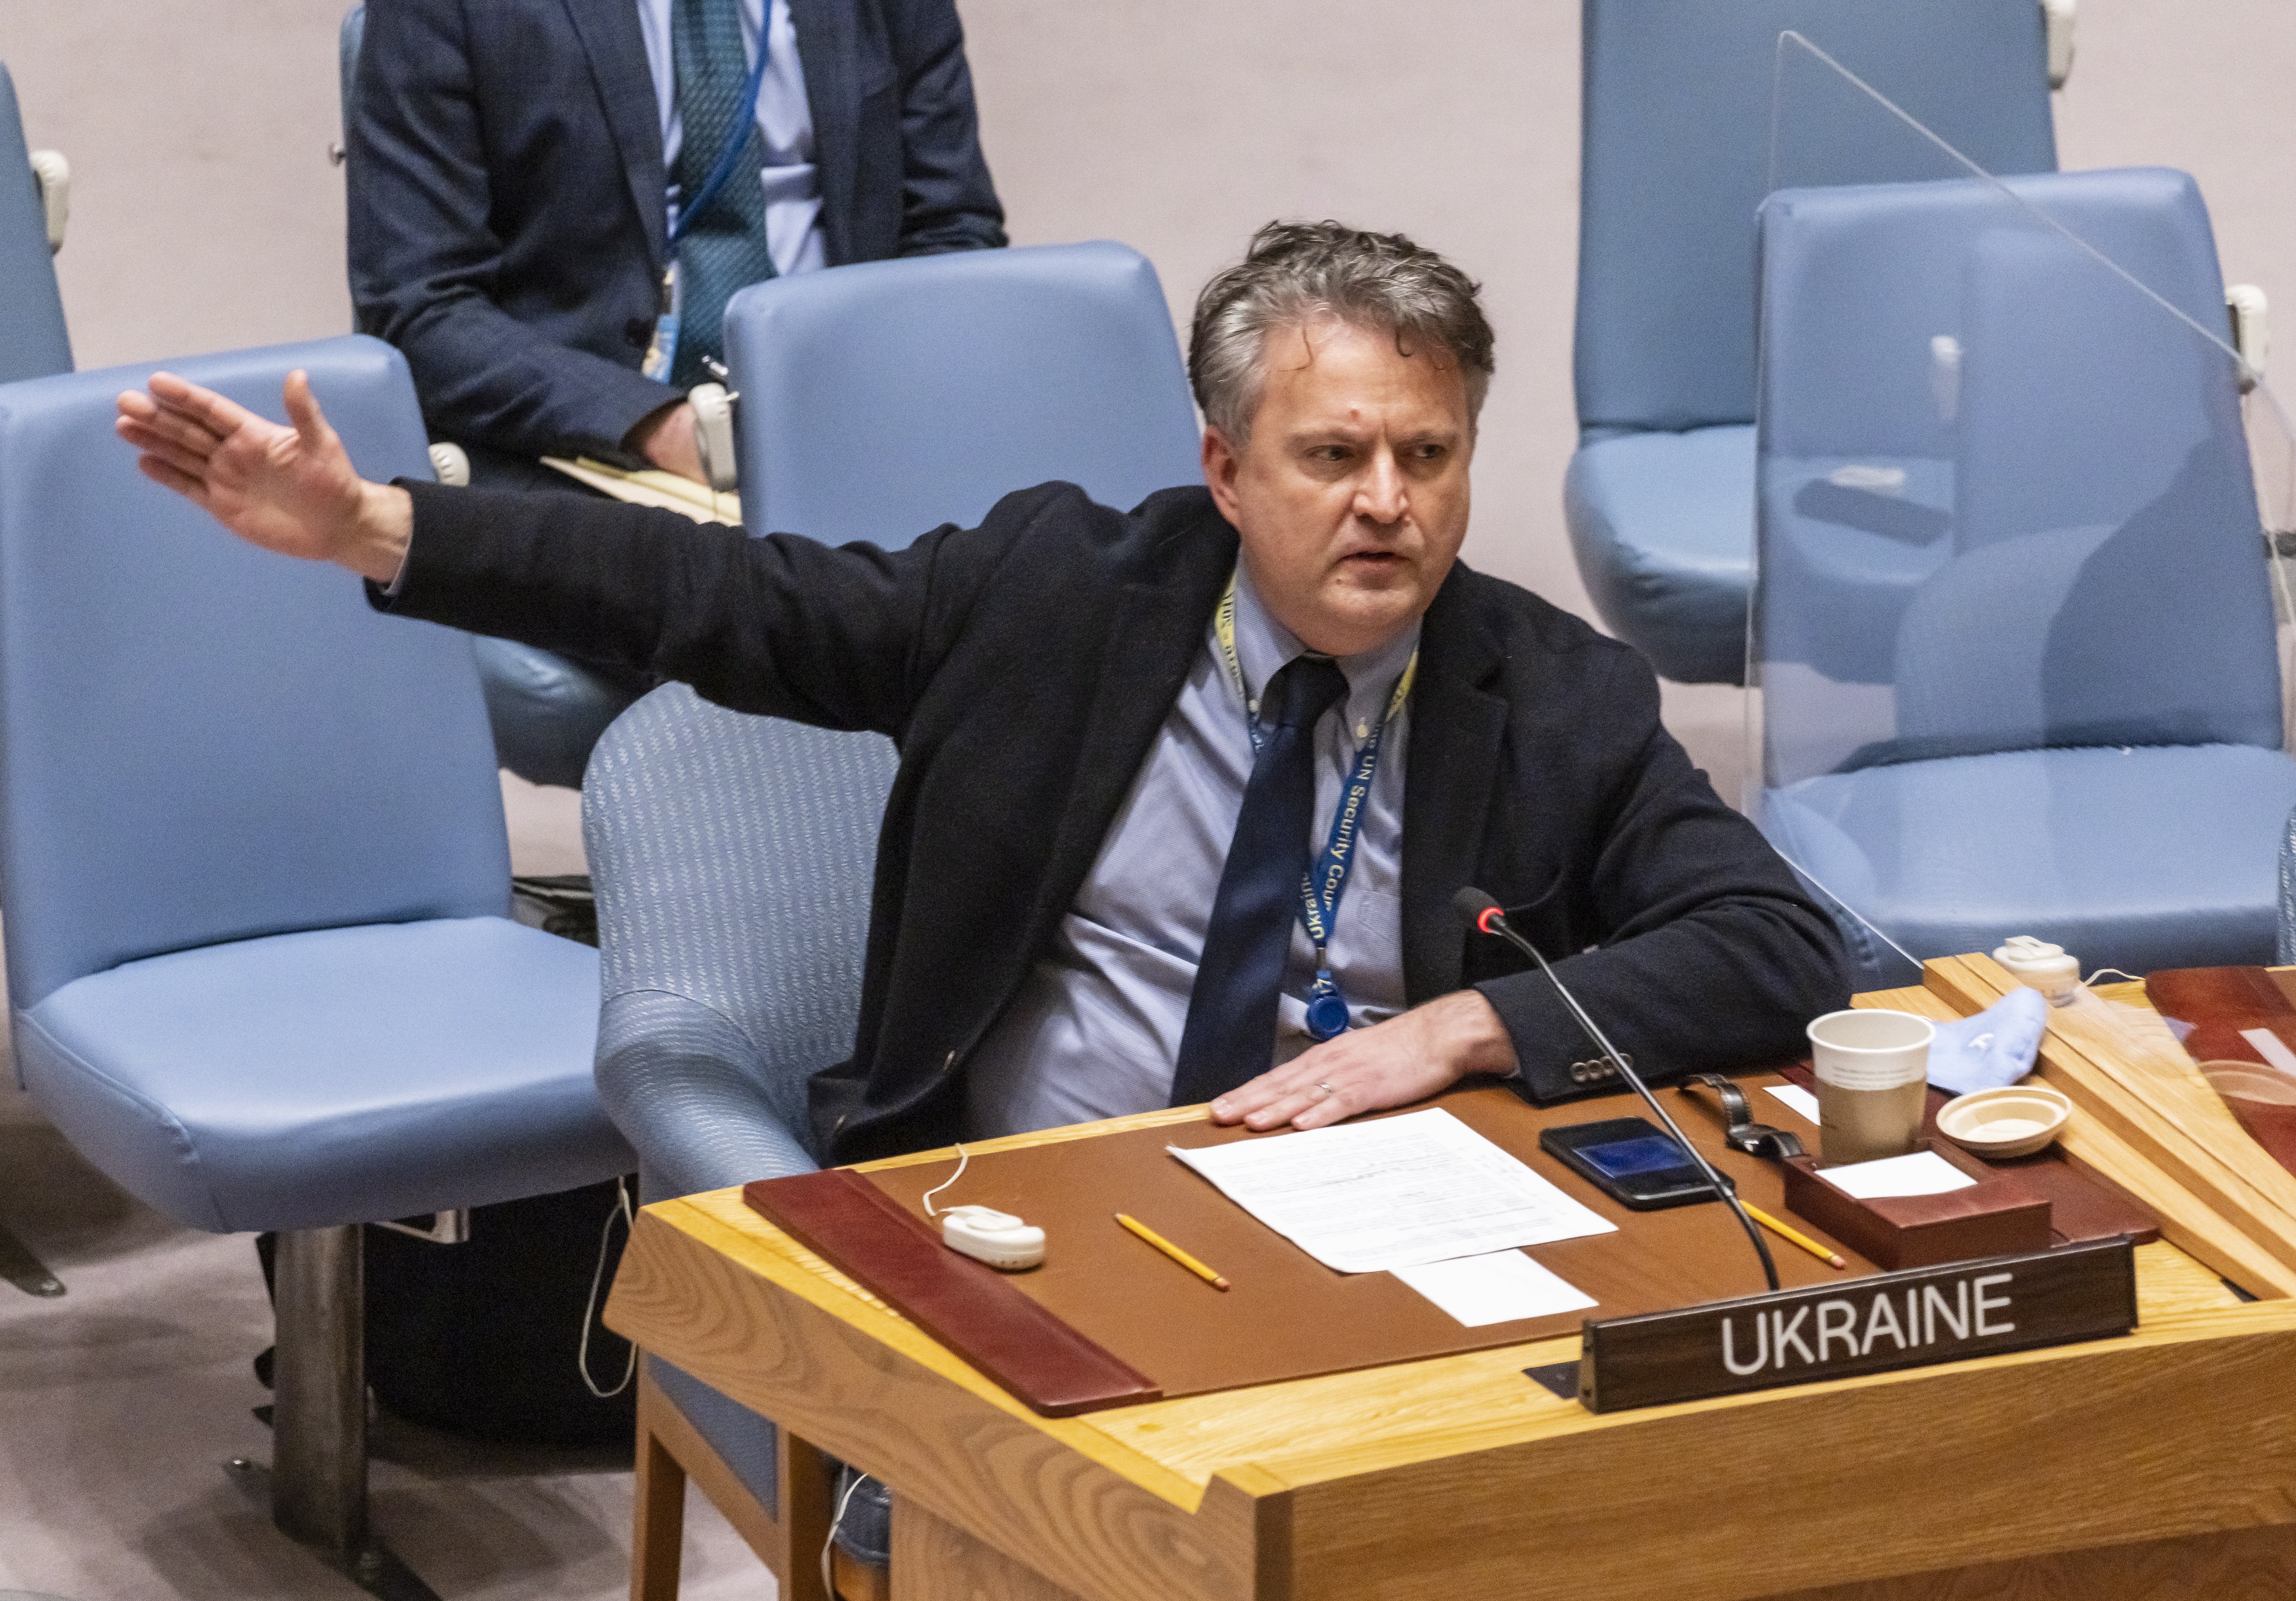 Representae Ucraina Consejo Seguridad ONU Efe